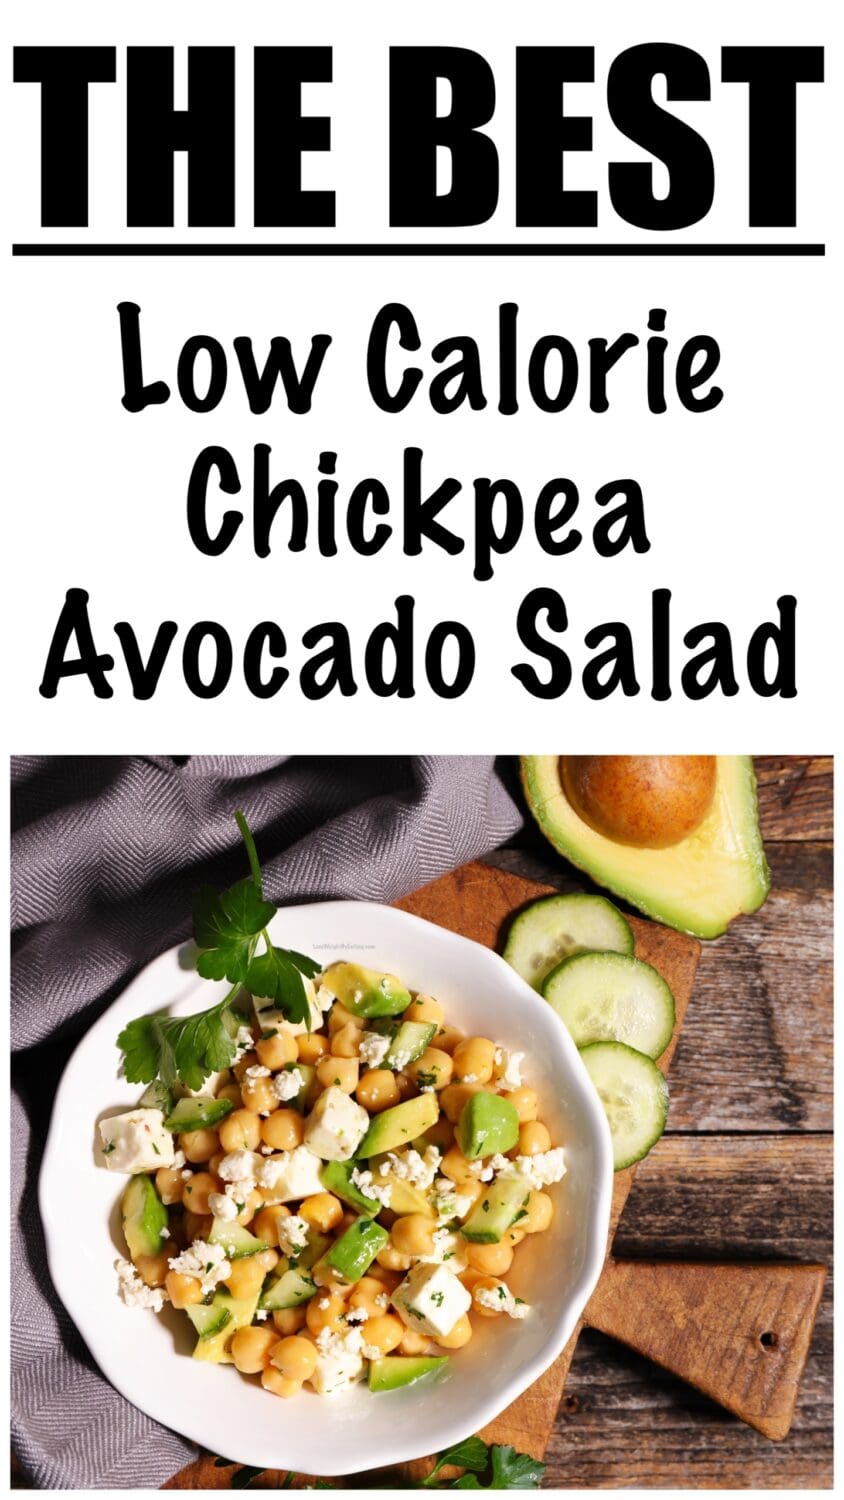 Low Calorie Chickpea Avocado Salad